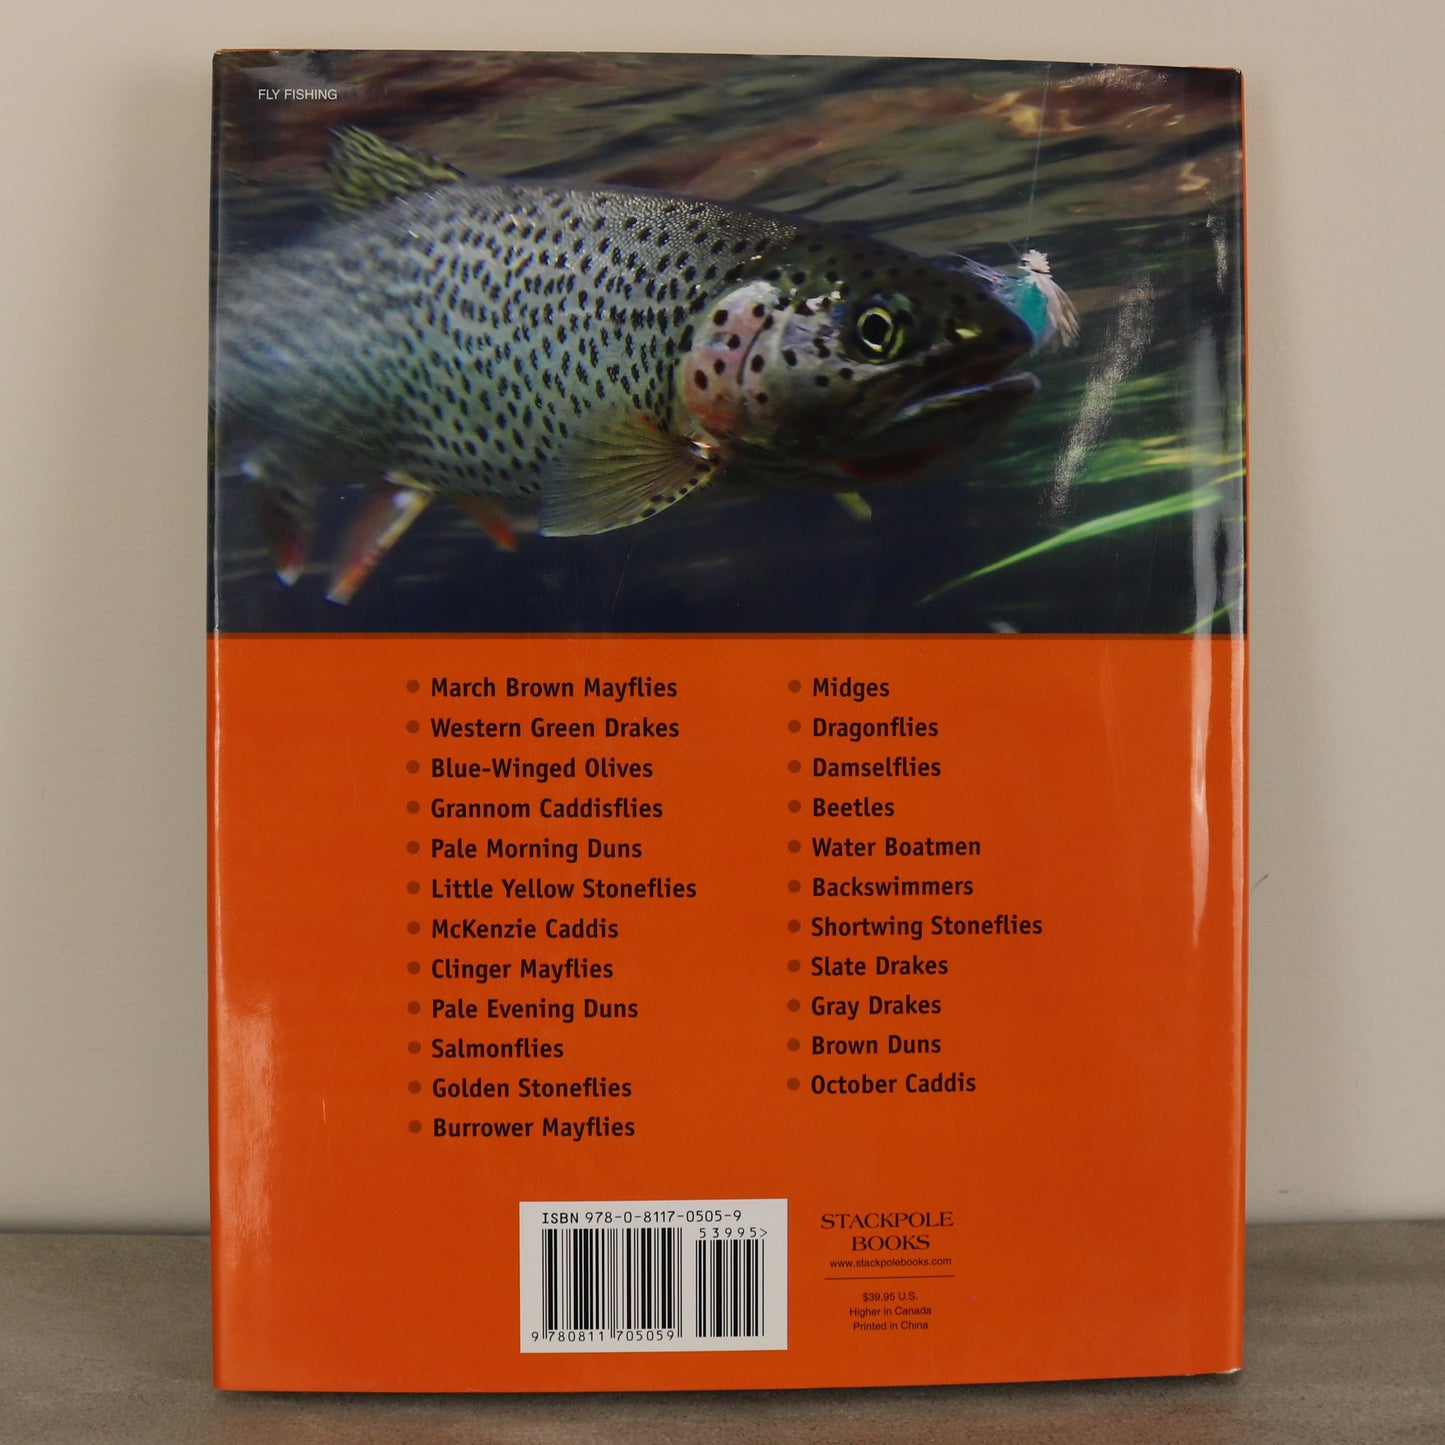 BugWater River Fly Fishing Fish Prey Aquatic Bugs Fishermen Guide Used Book